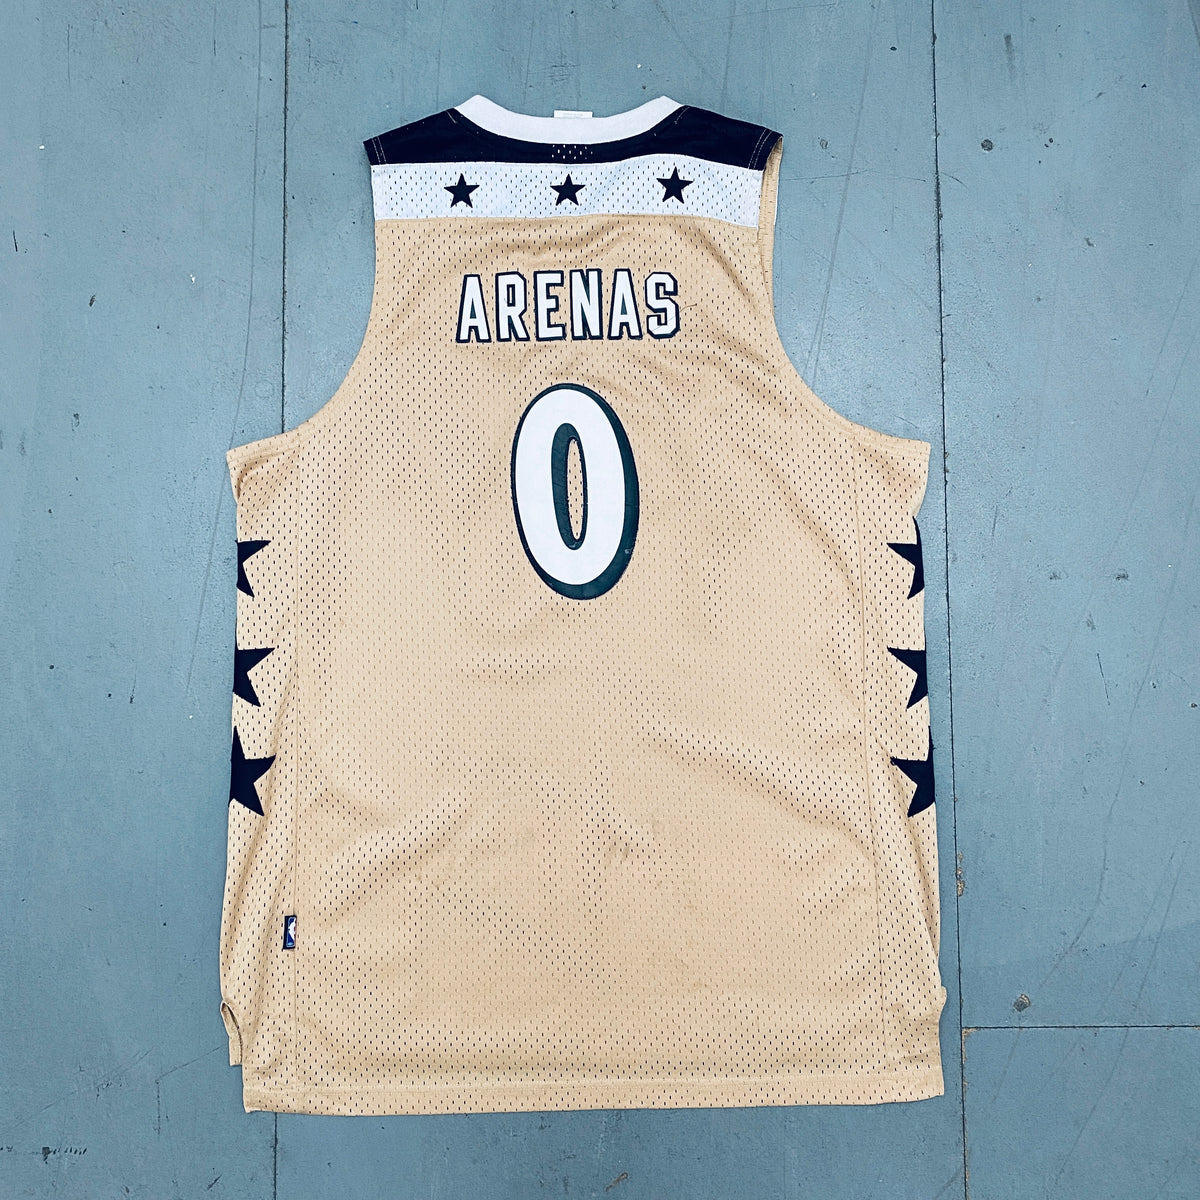 Buy jersey Washington Wizards Gold Alternate: '06 - '09